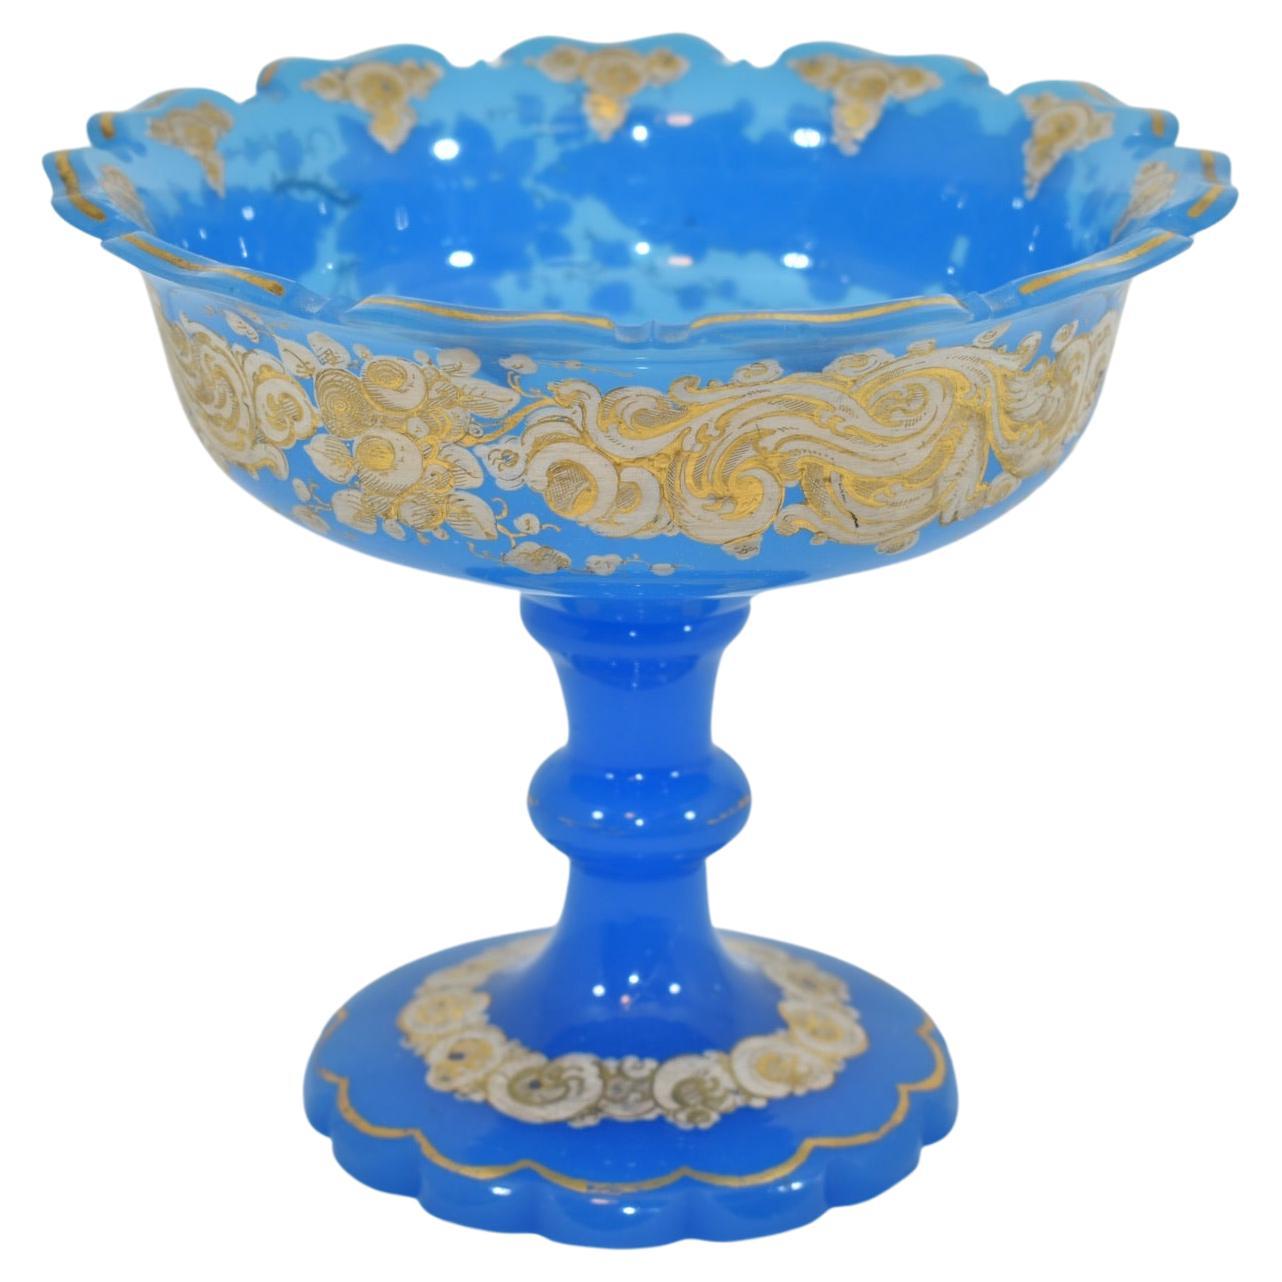 Bol Tazza en verre émaillé opalin bleu ancien, 19ème siècle